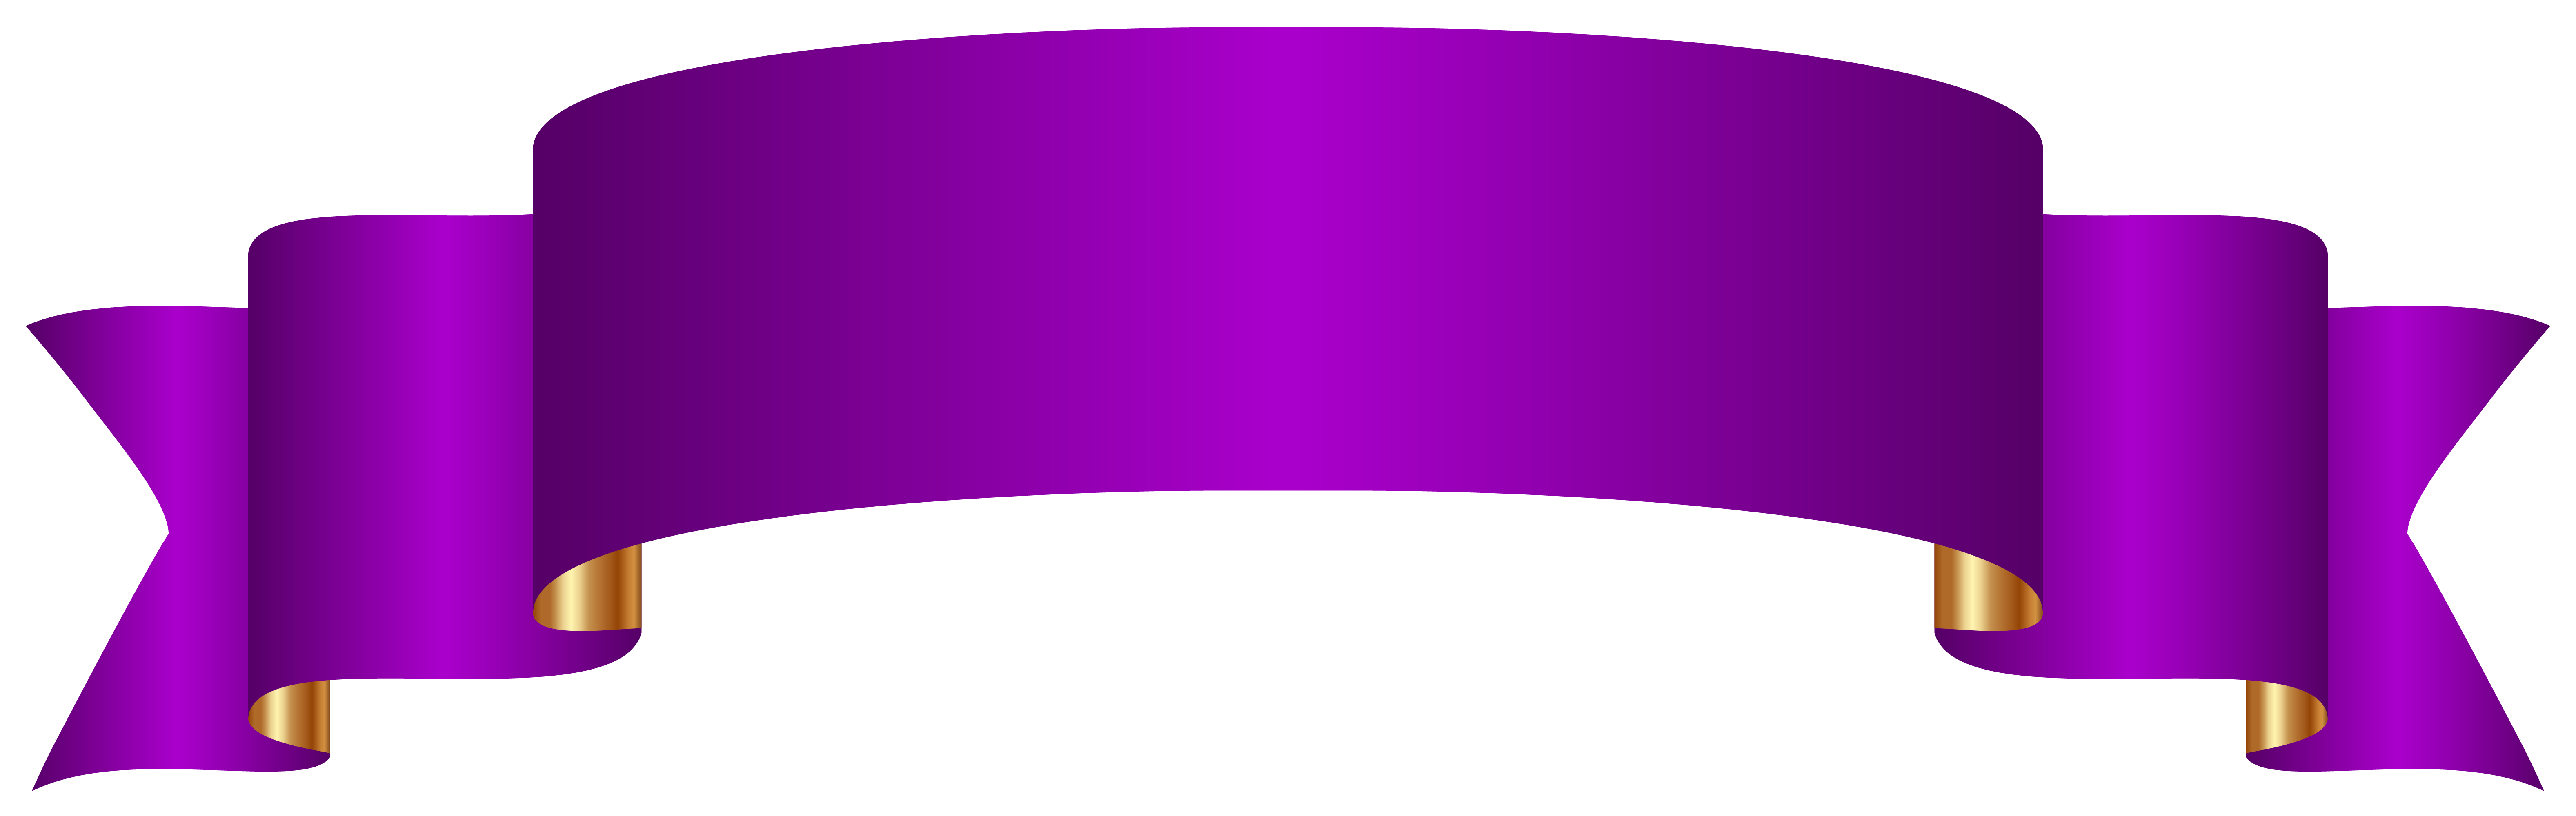 Gambar PNG Banner Violet